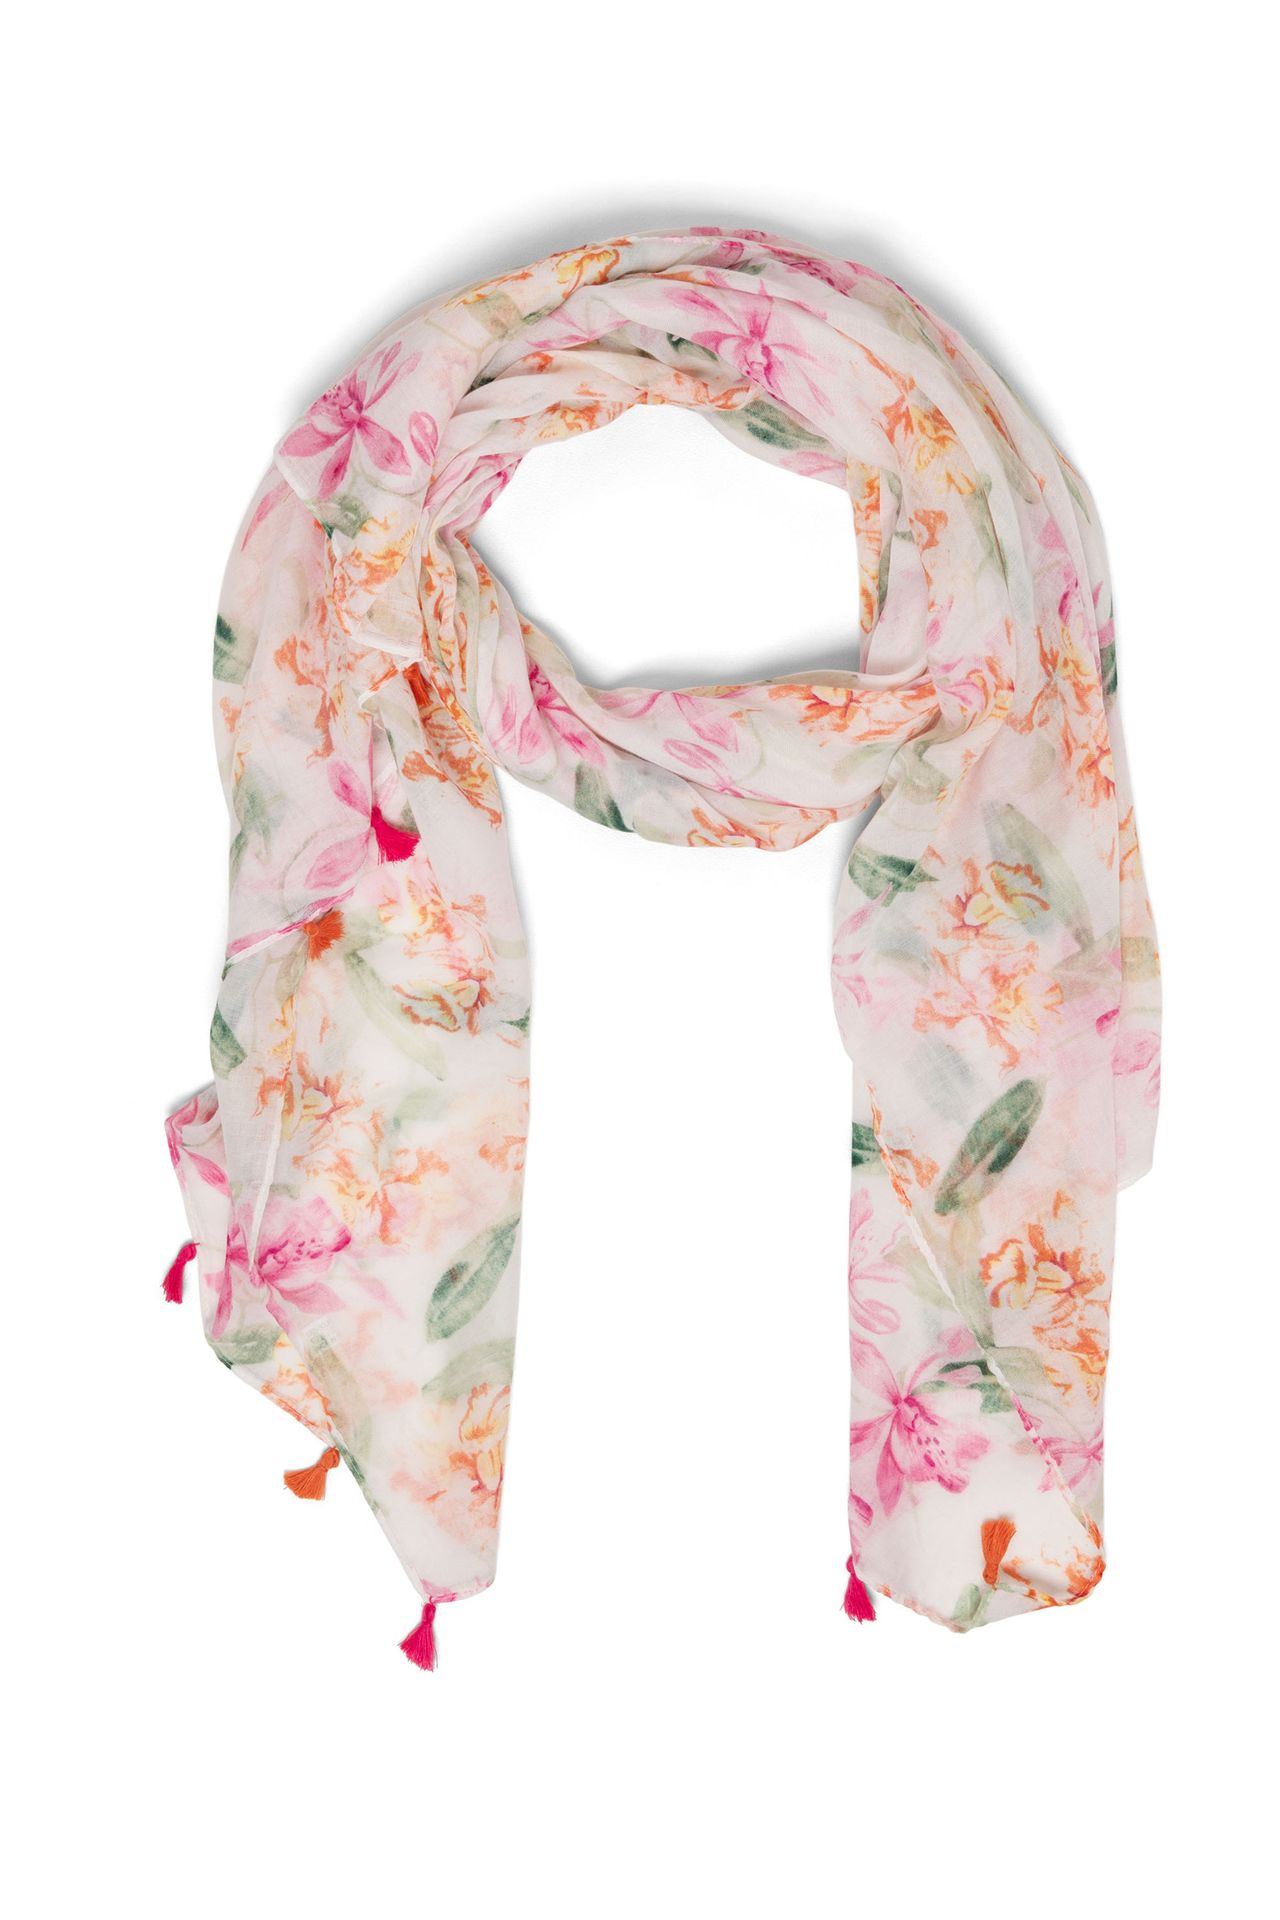 Norah Roze sjaal pink multicolor 213590-920